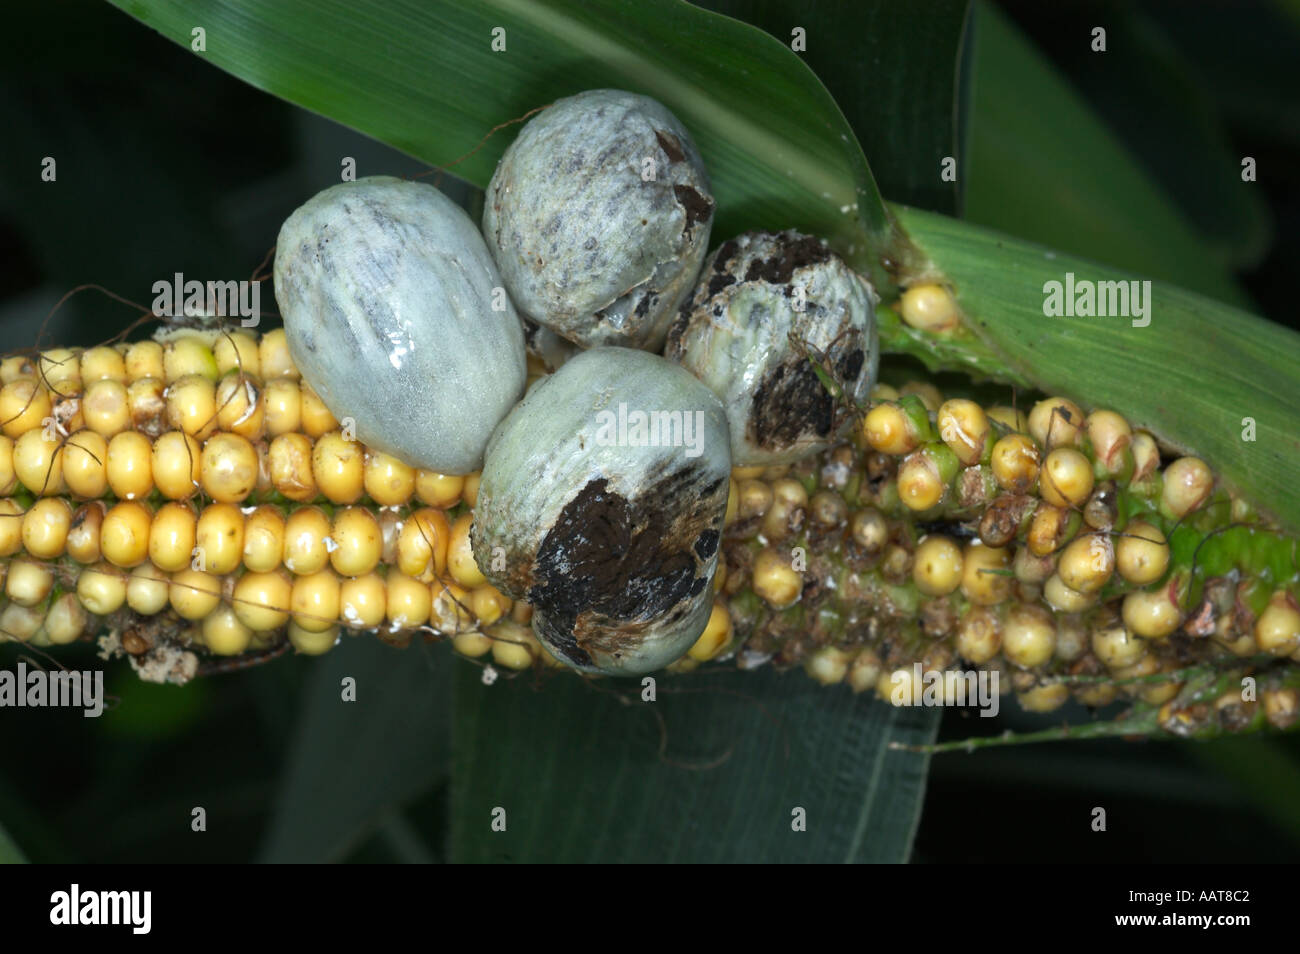 corn smut Ustilago maydis smut fungus  Stock Photo